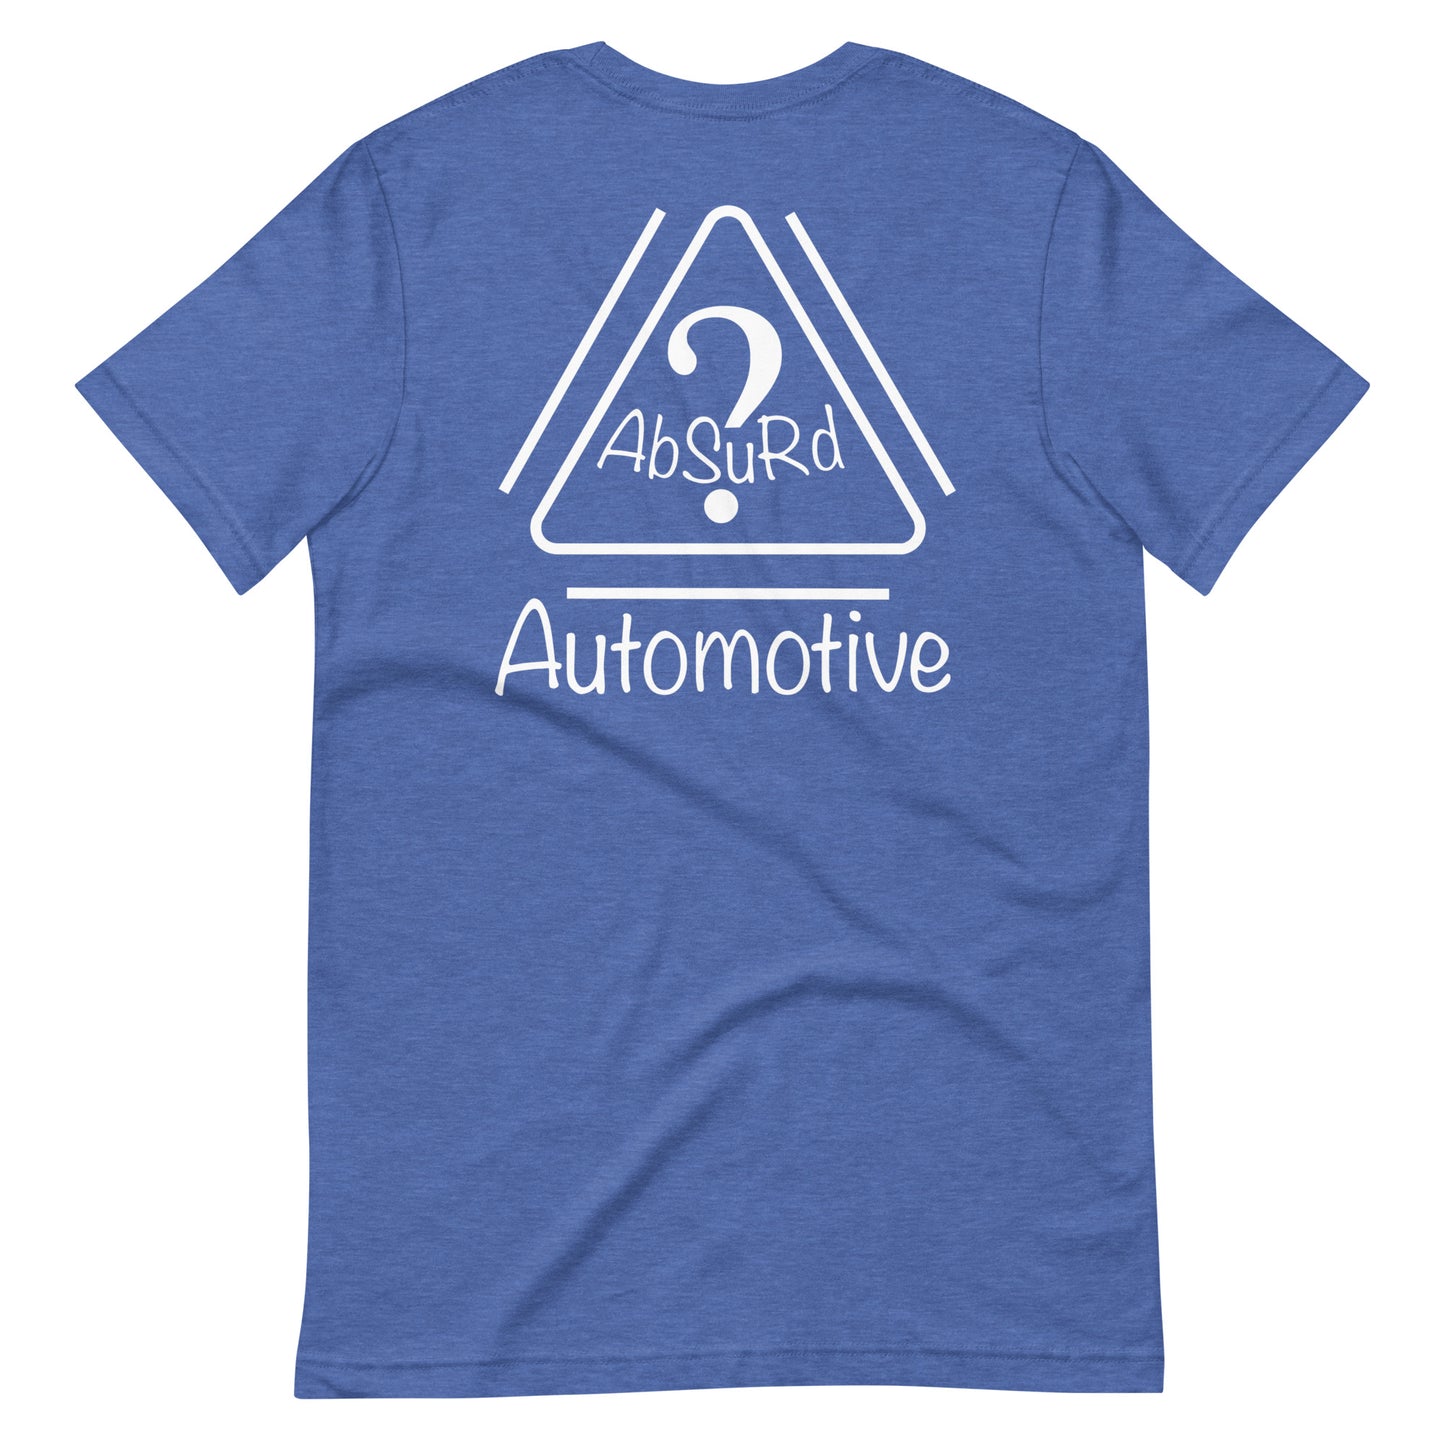 Absurd automotive t-shirt